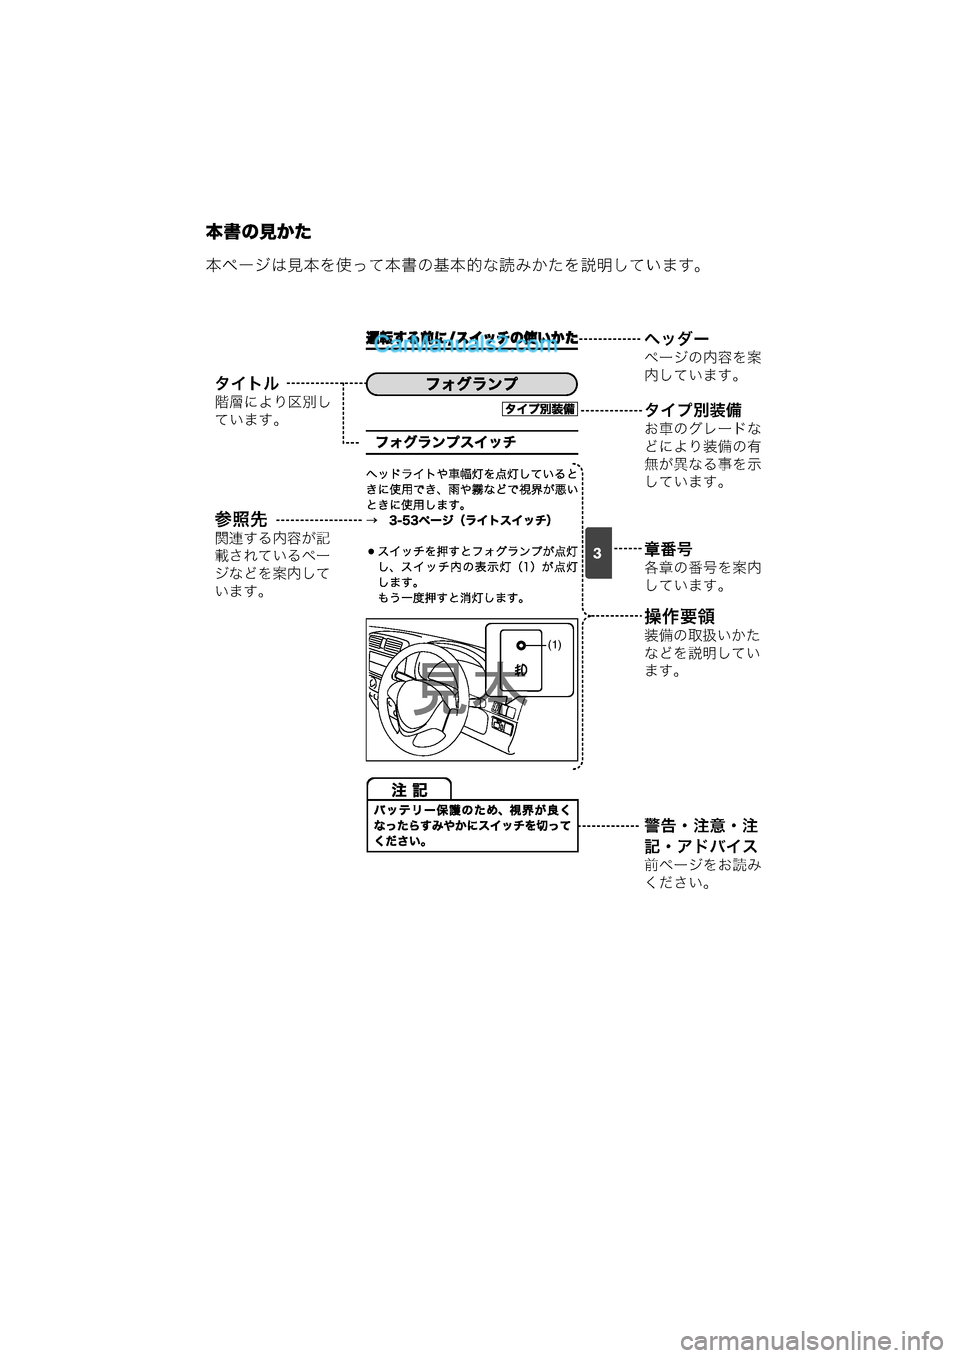 MAZDA MODEL CARROL 2015  取扱説明書 (キャロル) (in Japanese) 本書の見かた
本ページは見本を使って本書の基本的な読みかたを説明しています。
3
(1)
‰n’µ
¡>[]
9Q,ÿ
Nƒ0
\õ,^NÁ$

‚=<e